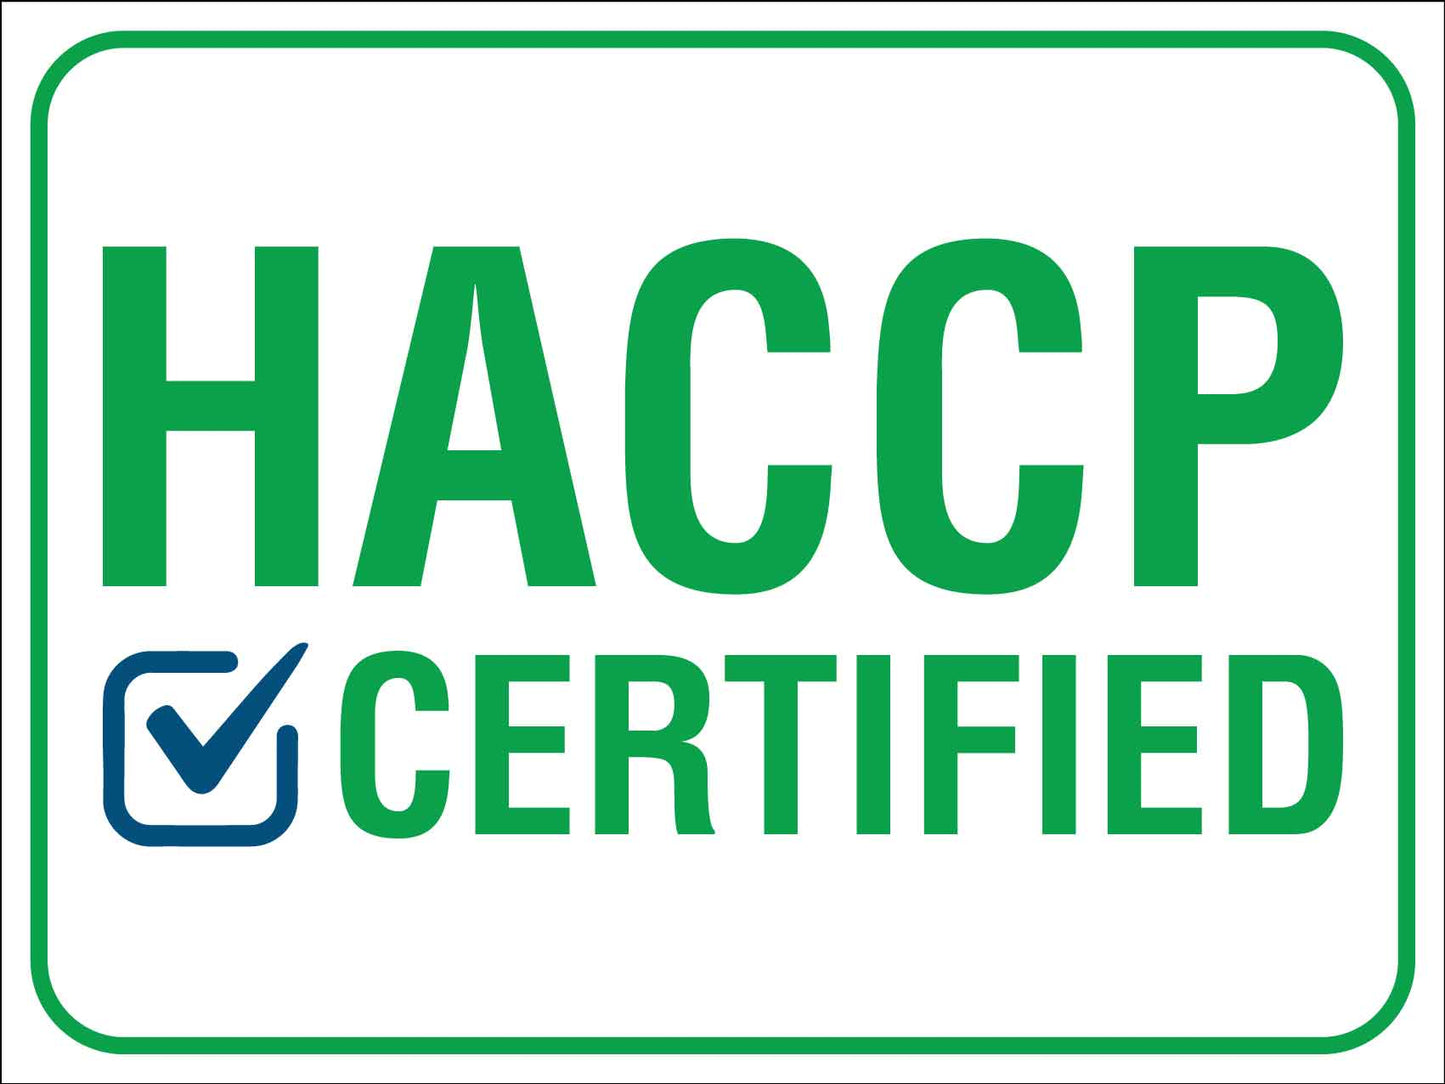 HACCP Certified sign